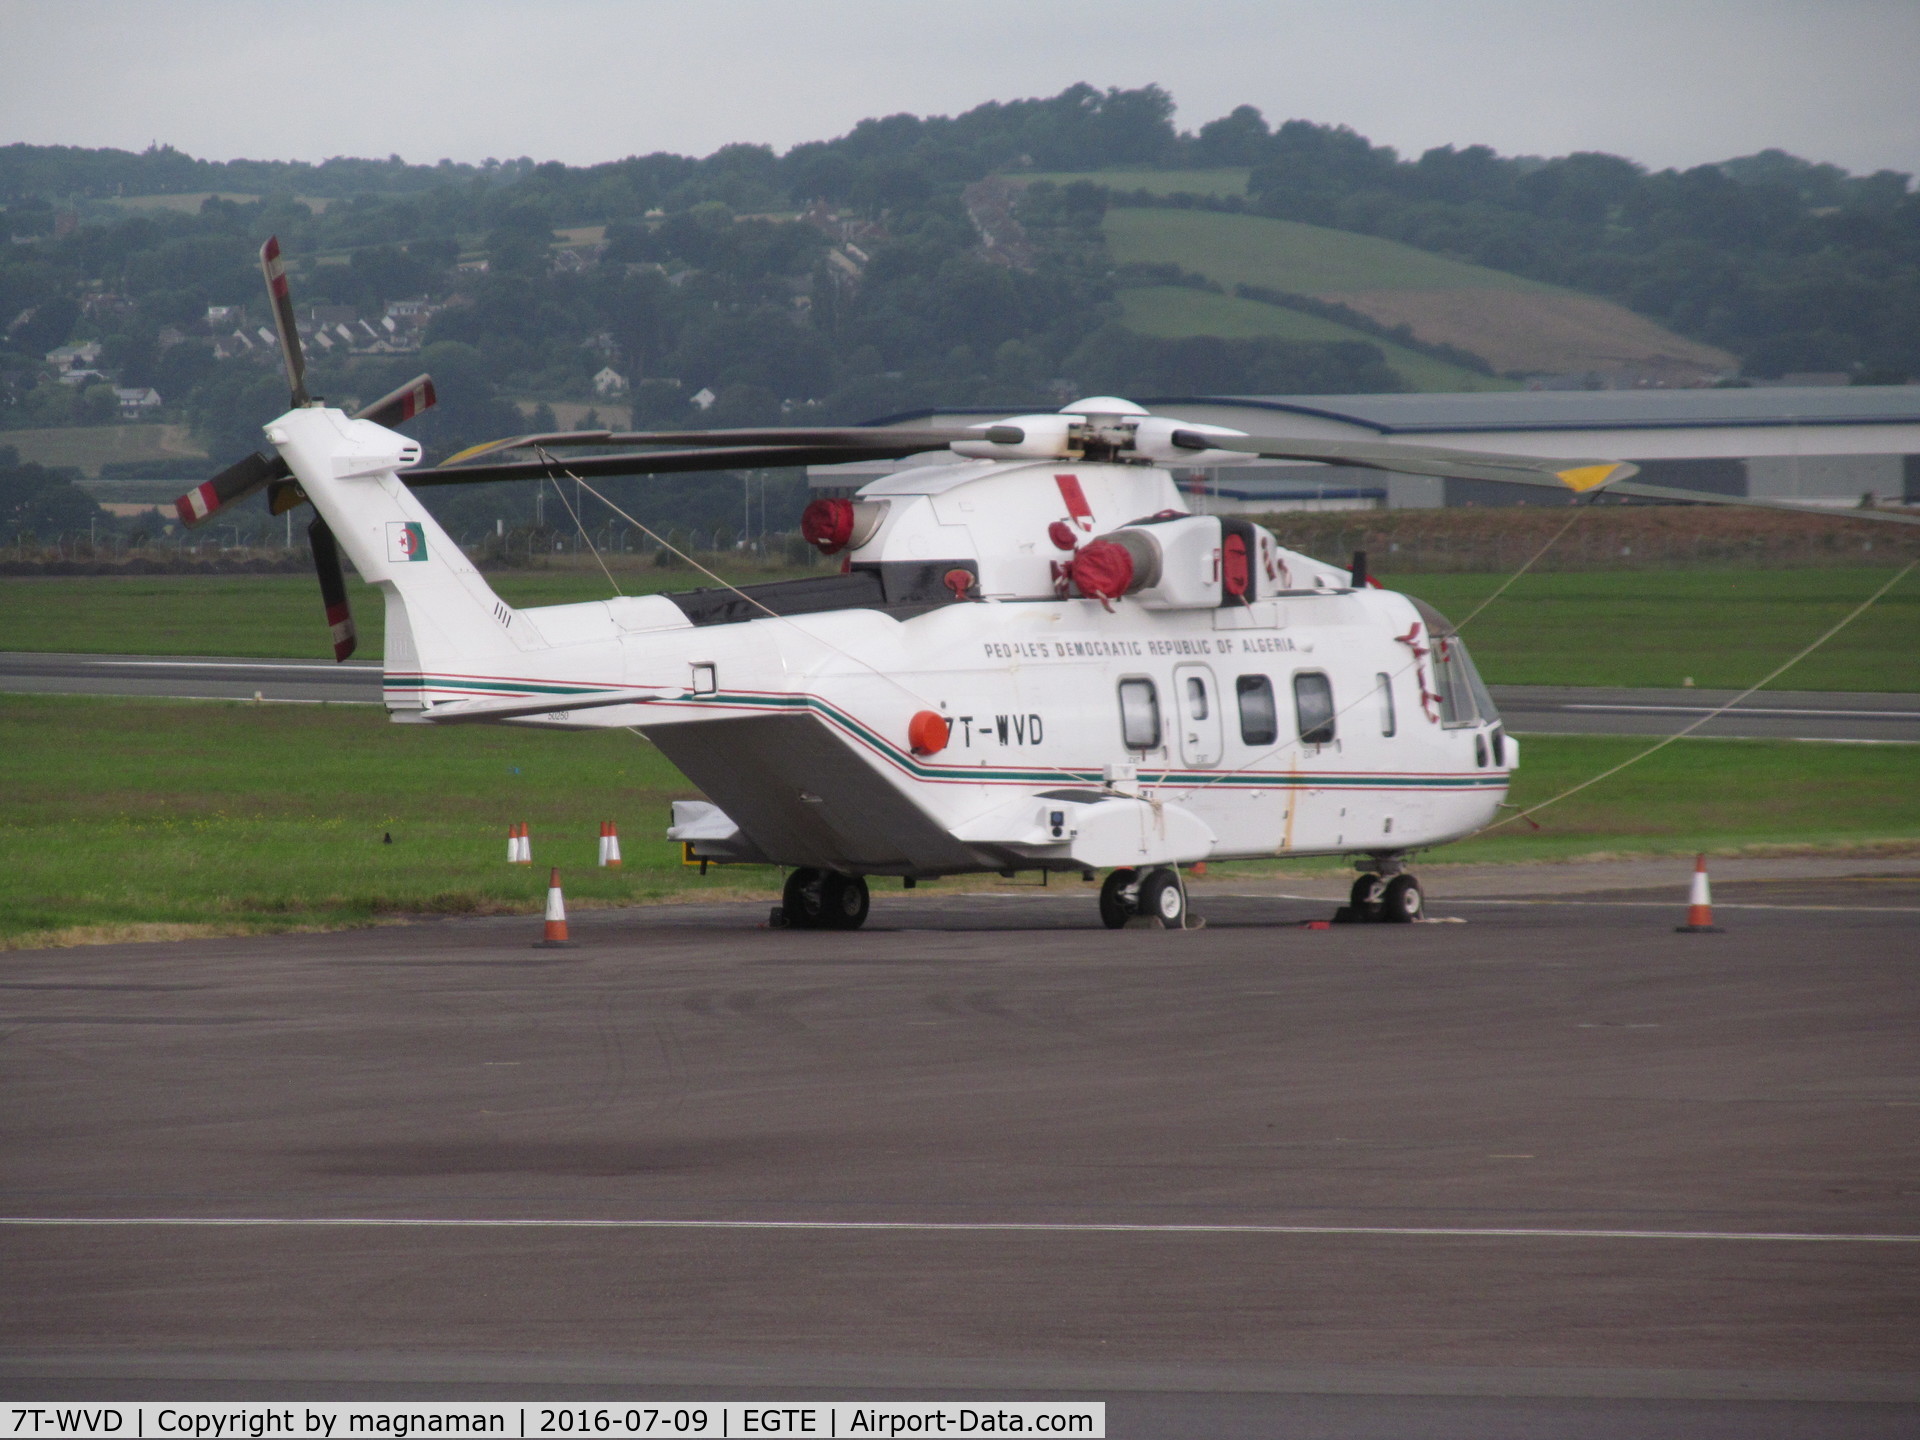 7T-WVD, AgustaWestland AW-101 Series 642 C/N 50250, at Exeter having flown in yesterday